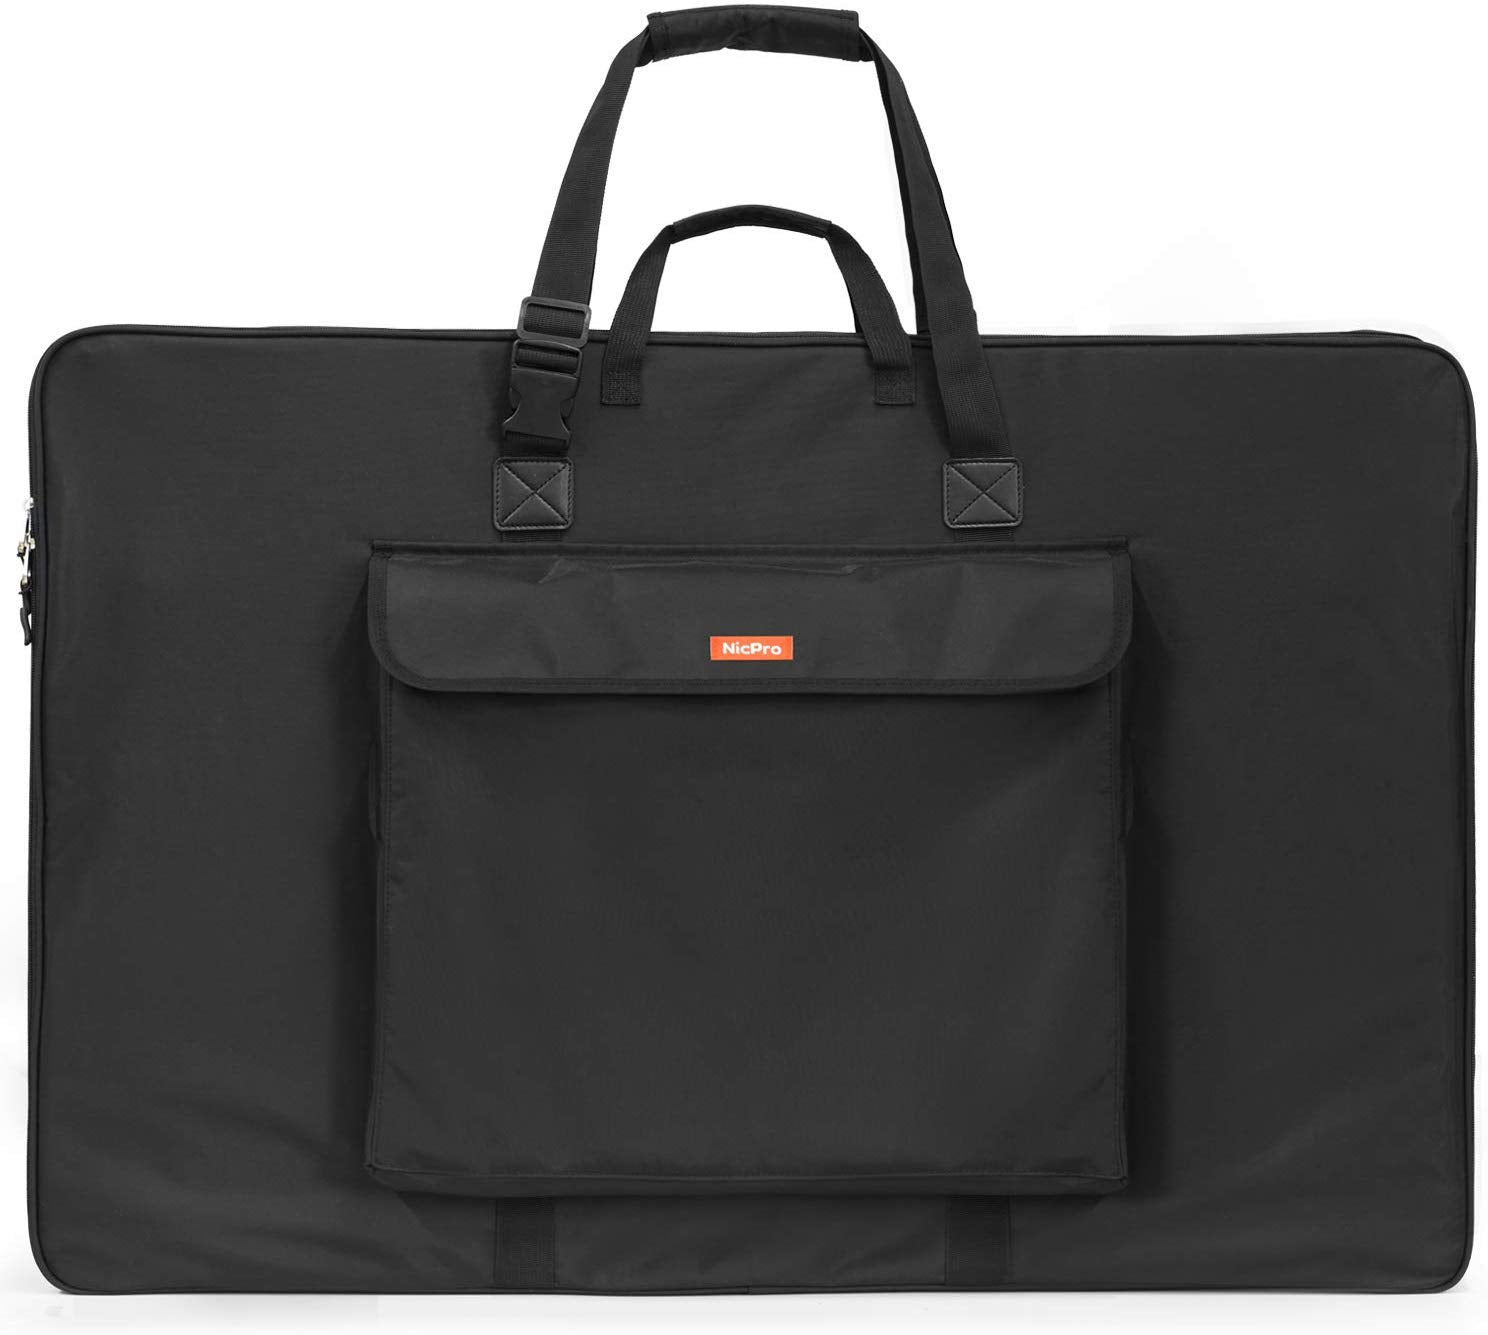 Nicpro Art Portfolio Bag 24 x 36 Inches Waterproof Artist Carrying Bag